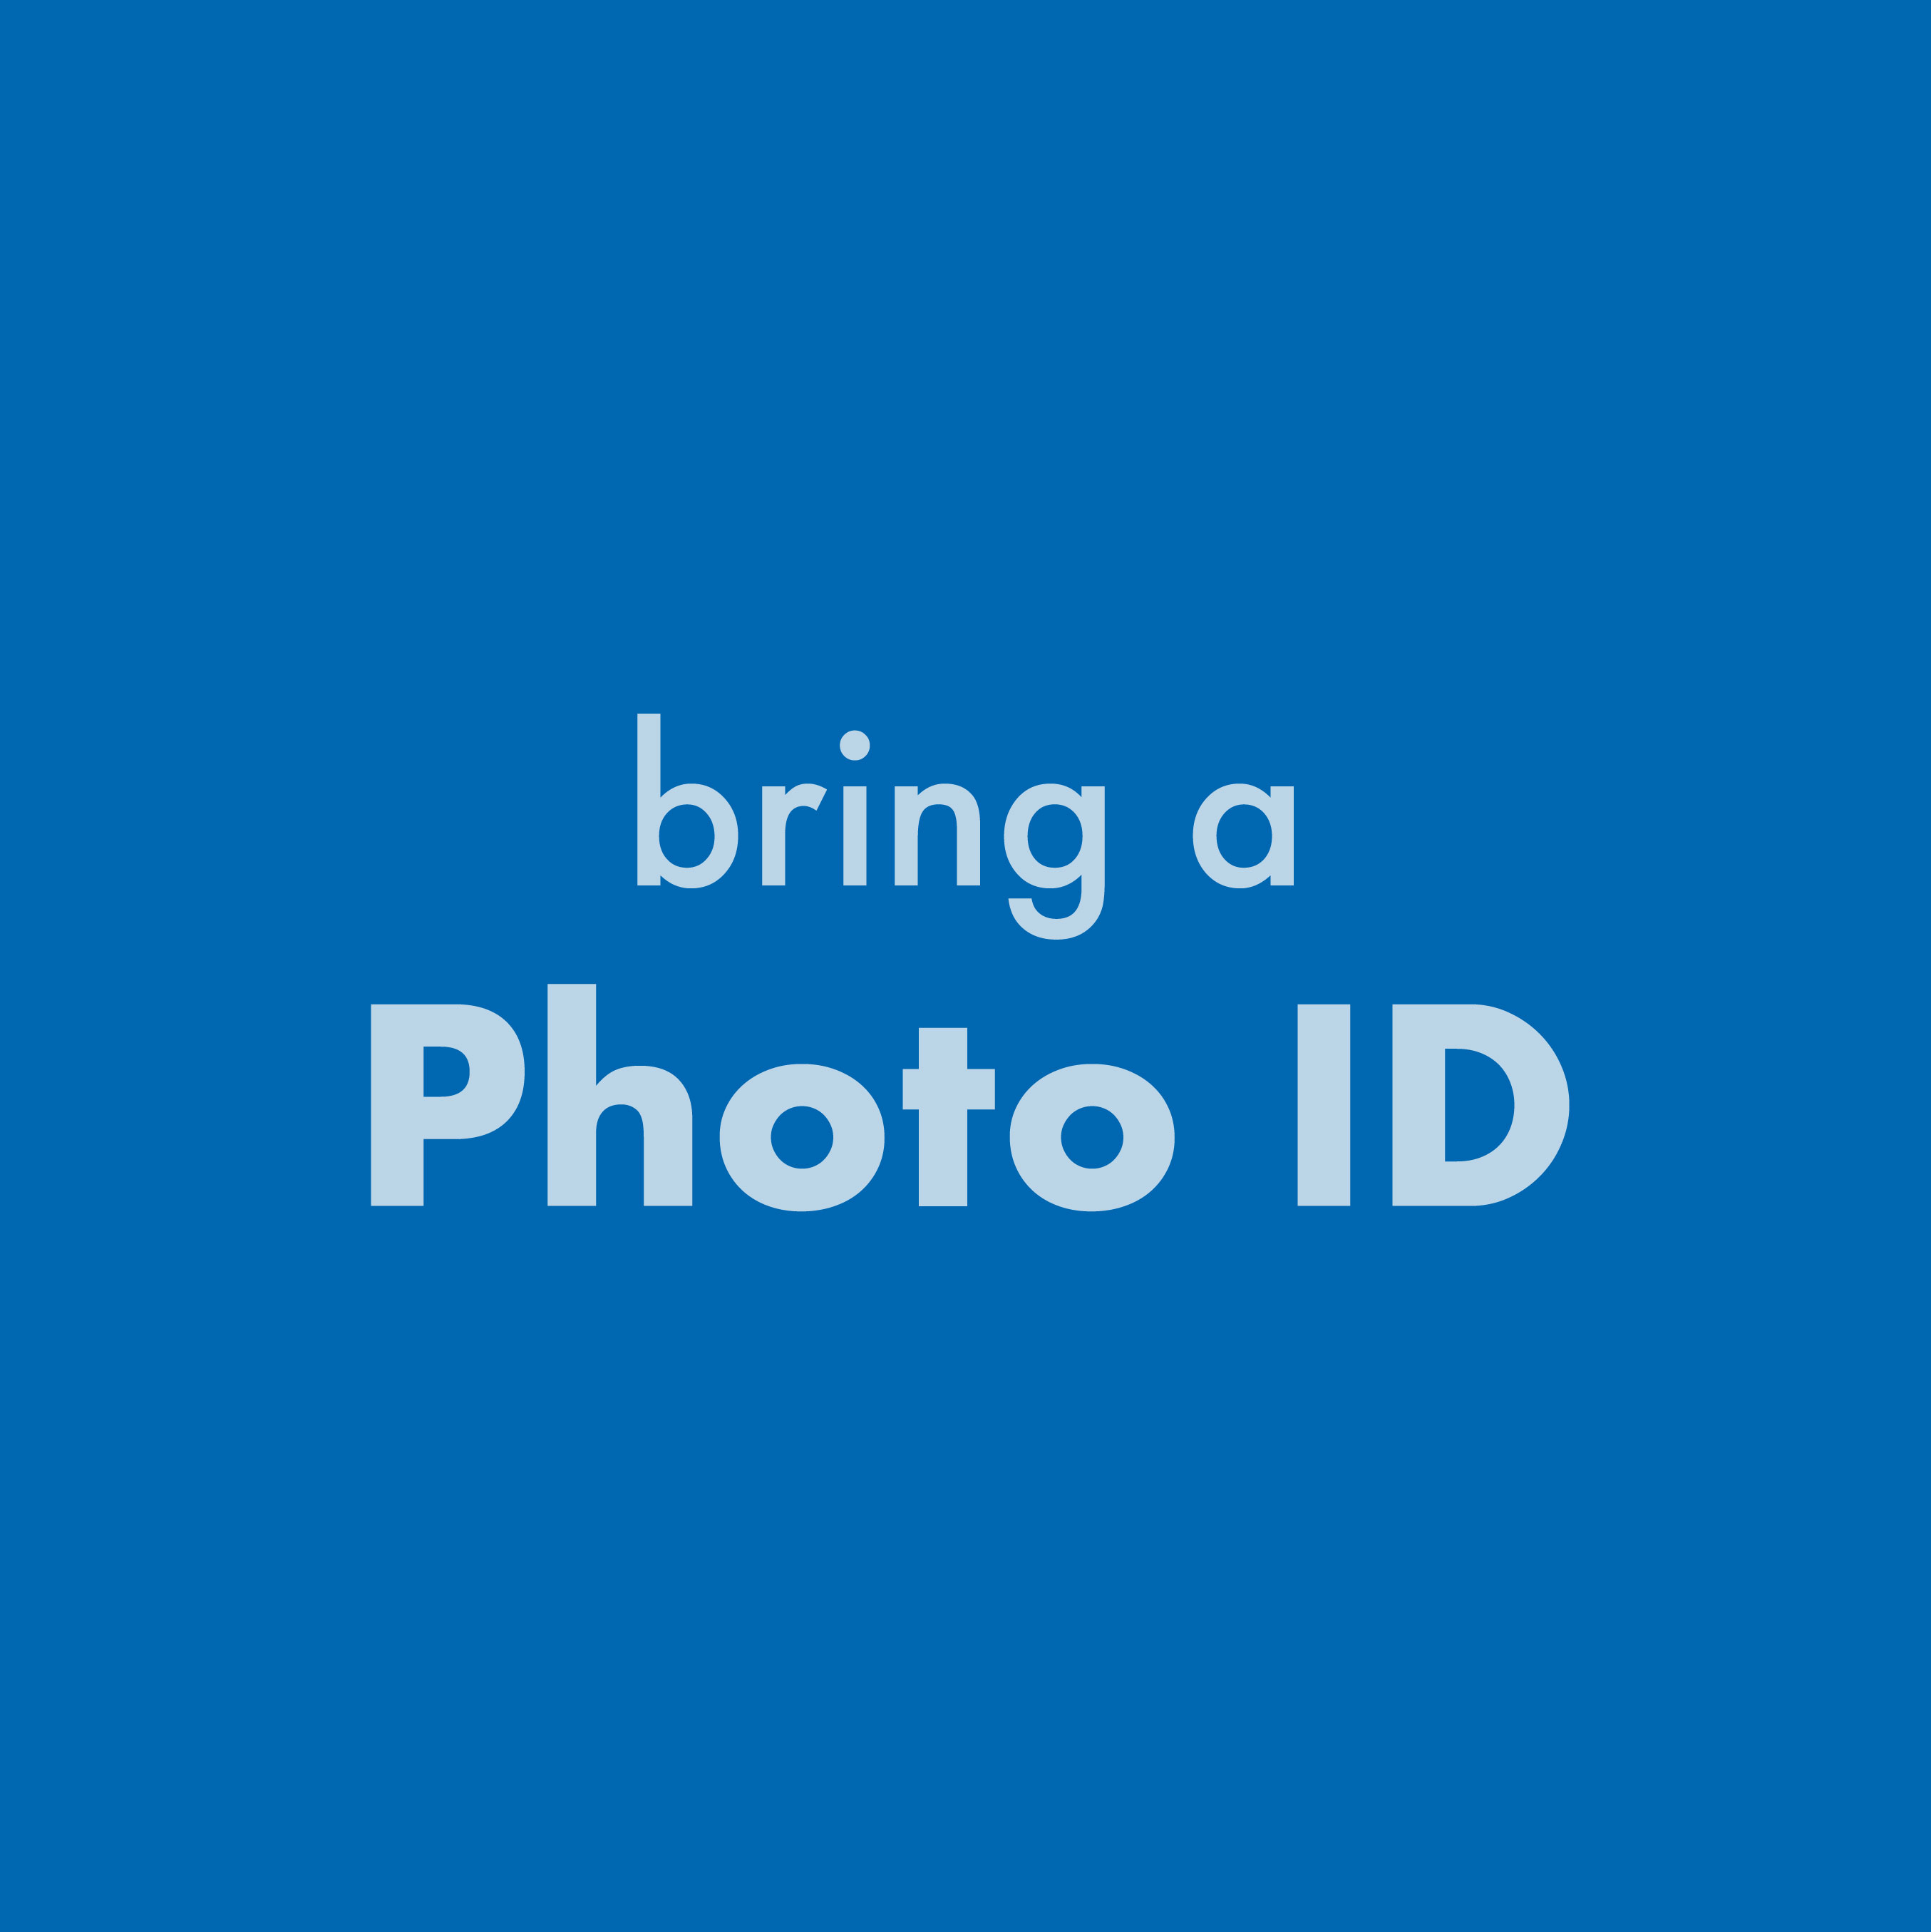 Bring photo ID